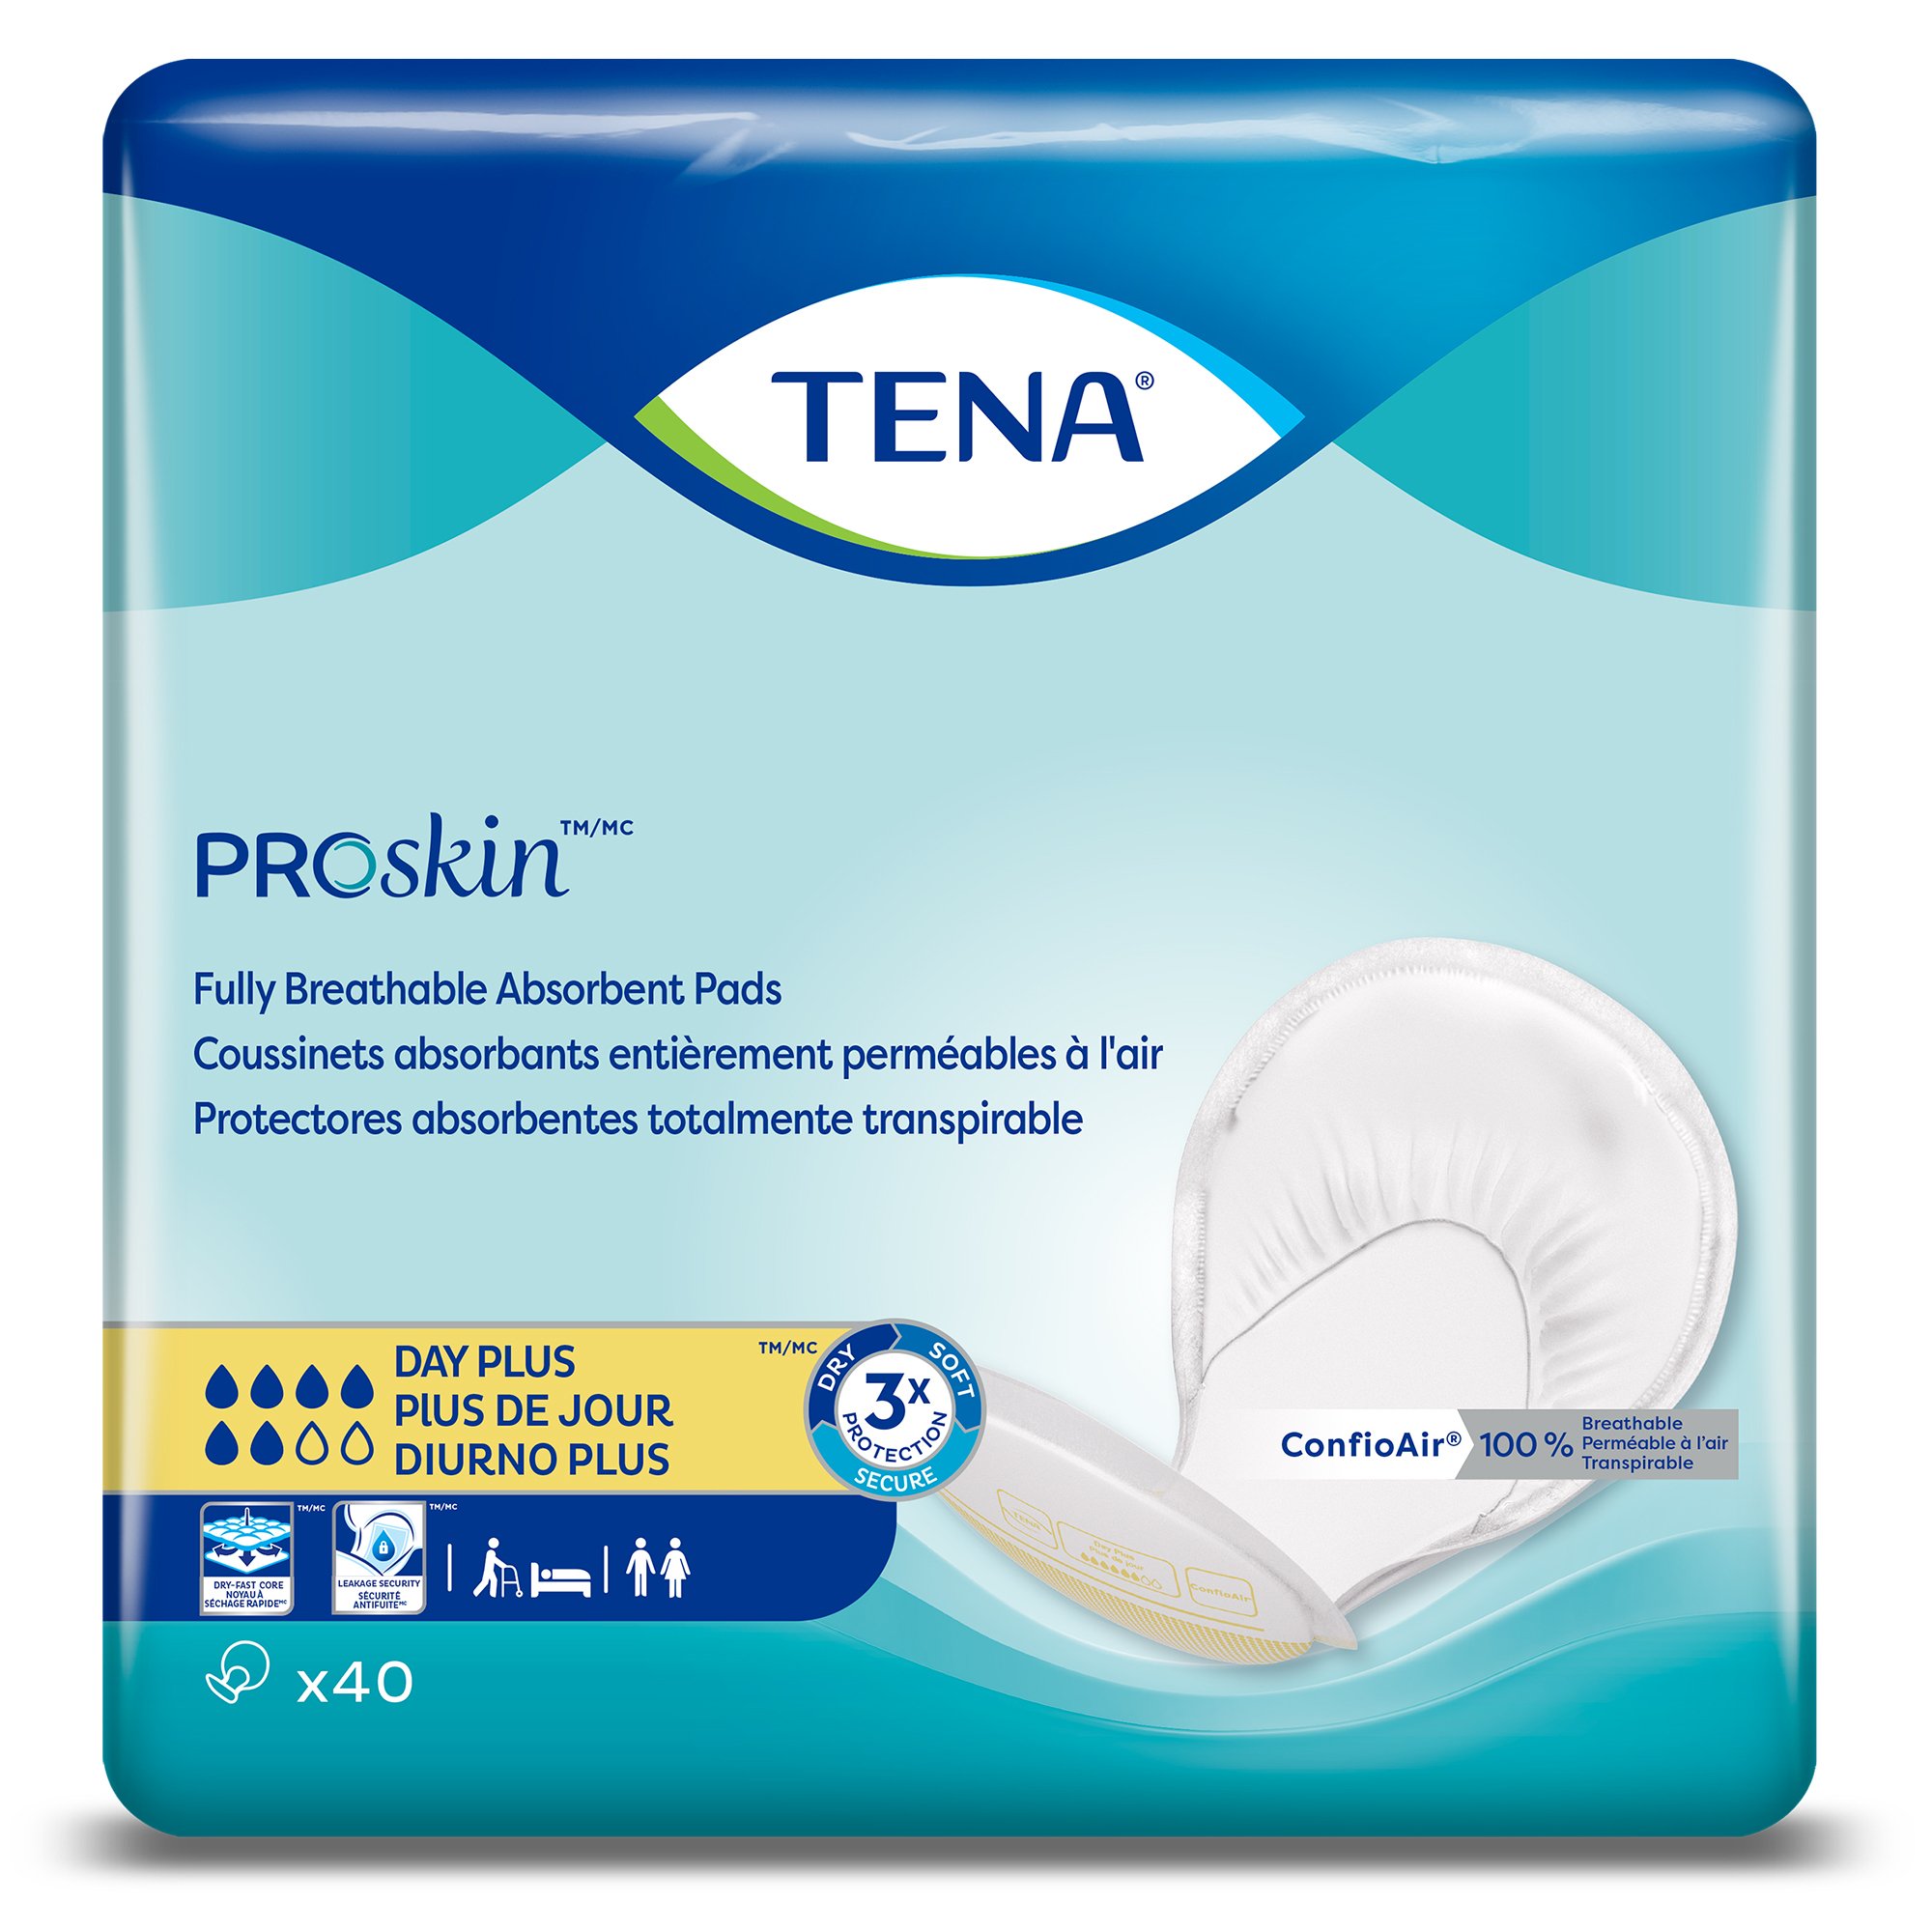 TENA Comfort Normal  Large shaped incontinence pad